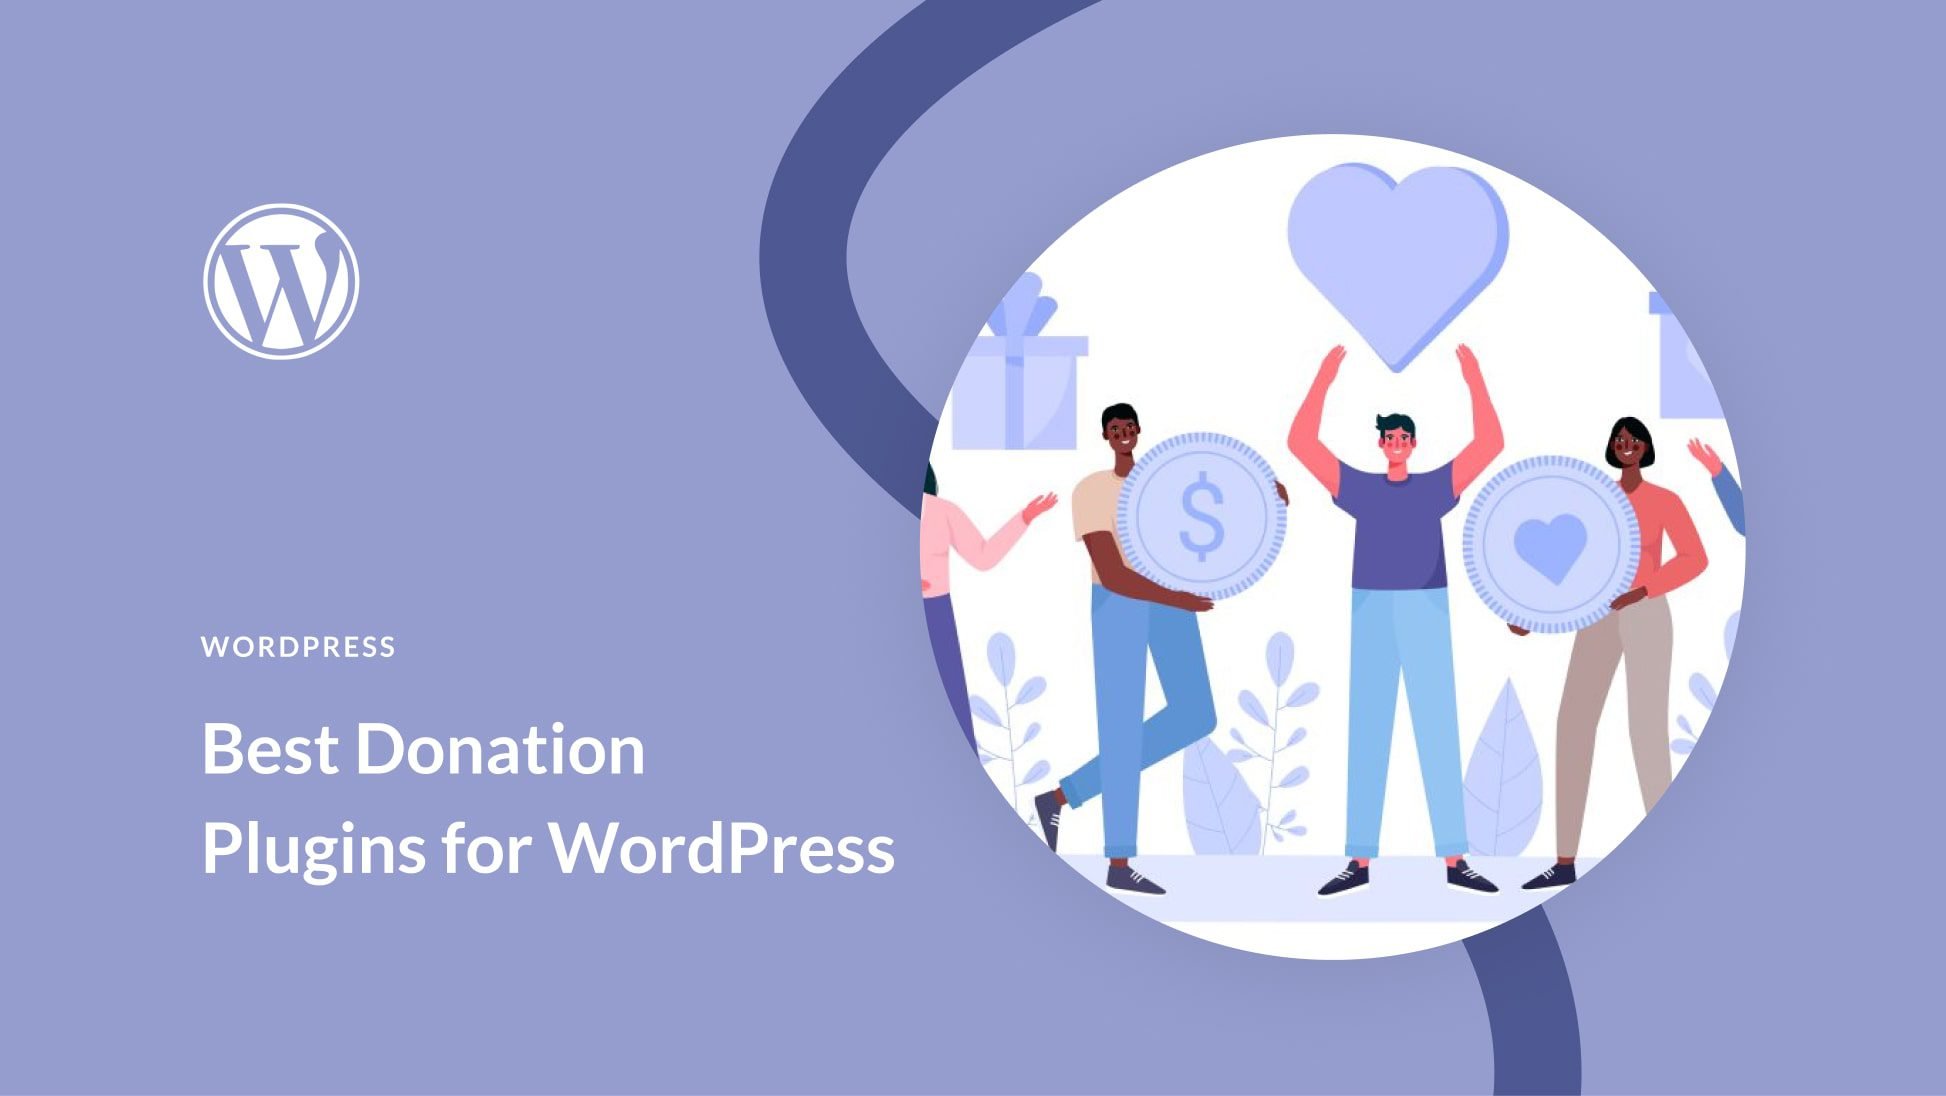 GiveWP – Donation Plugin and Fundraising Platform – WordPress plugin